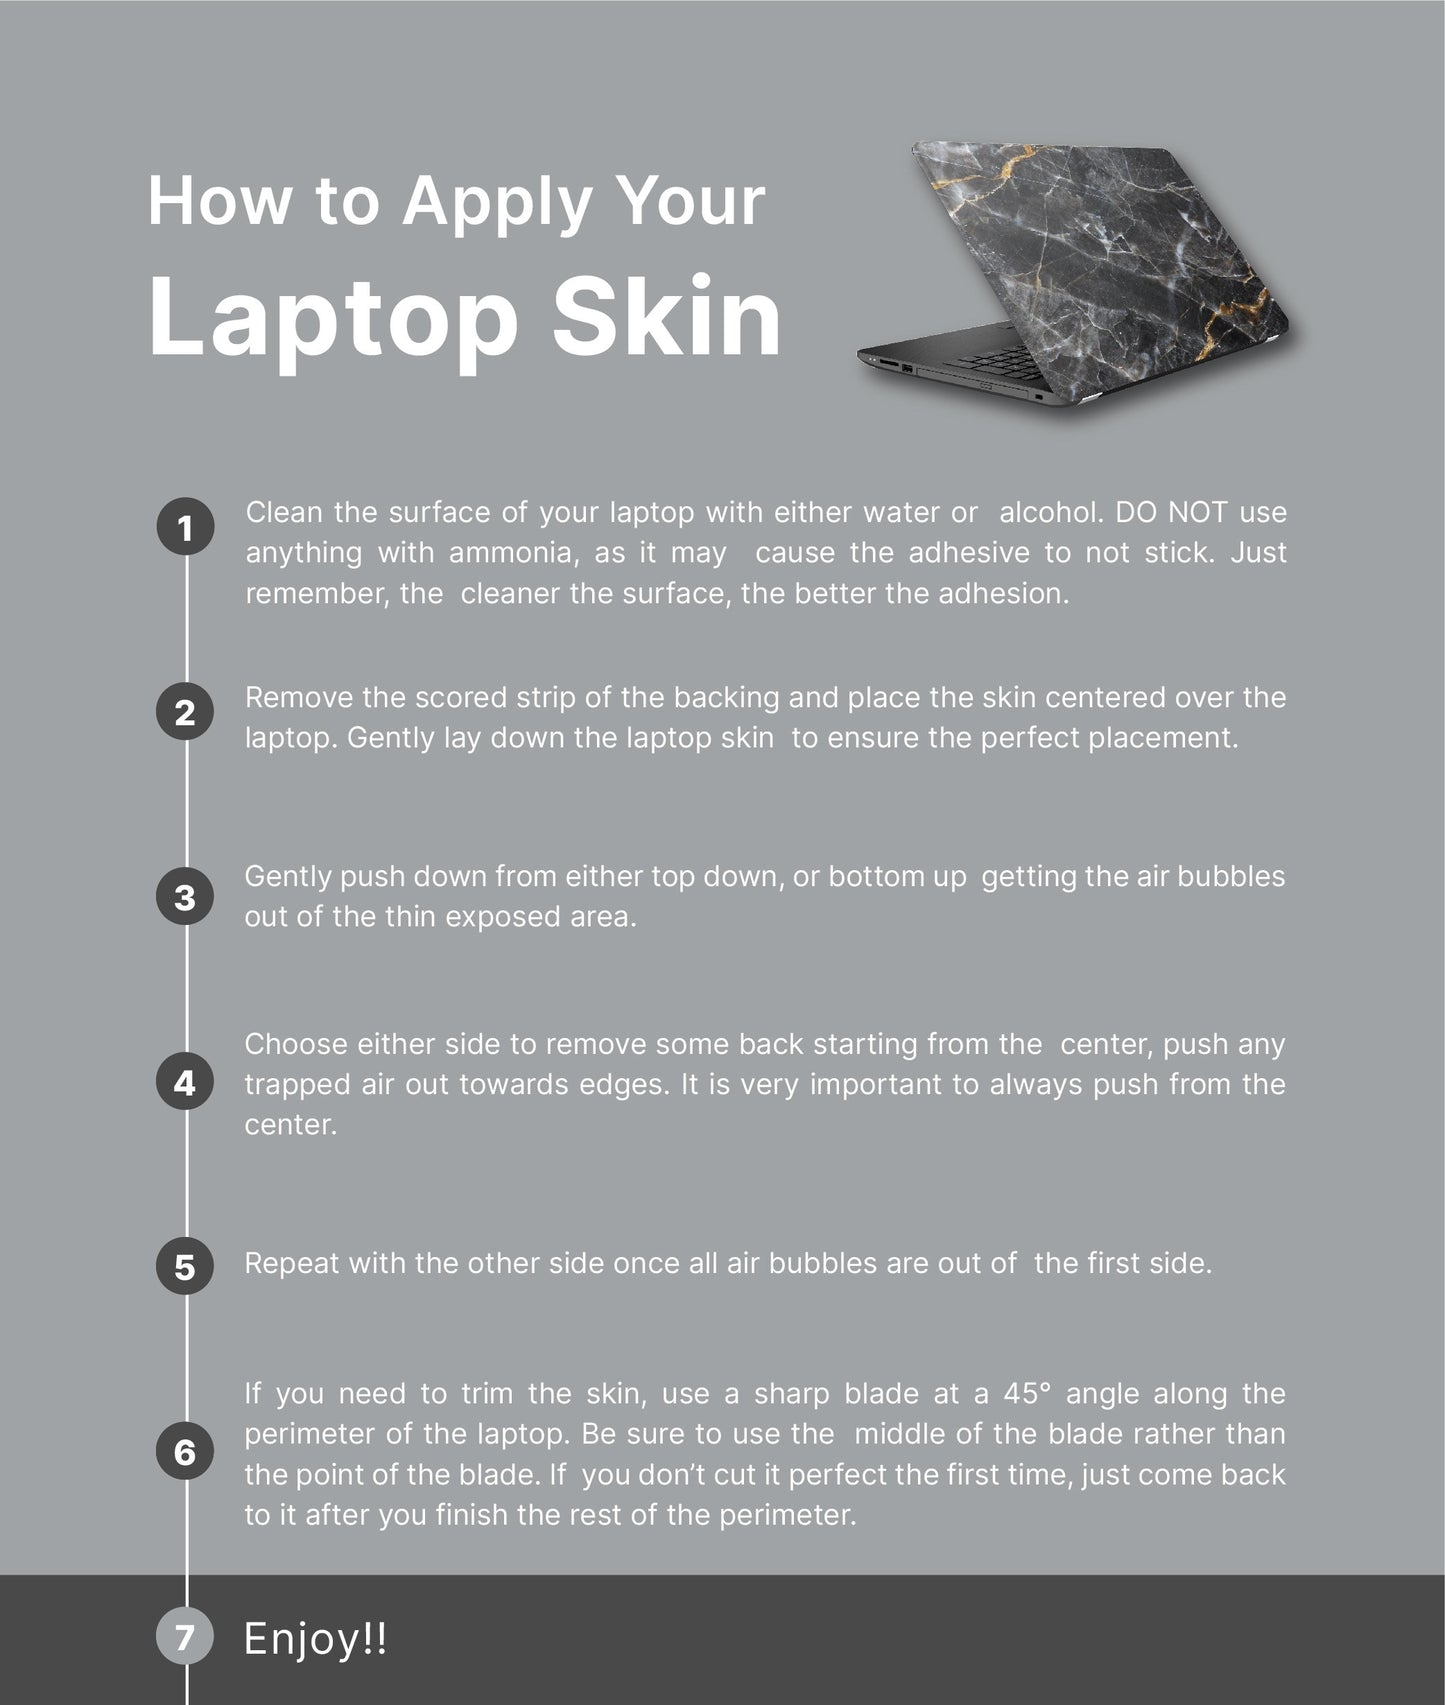 Geometric Marble Laptop Skin, Laptop Cover, Laptop Skins, Removable Laptop Skins, Laptop Decal, Customized Laptop Skin, Laptop Stickers 353